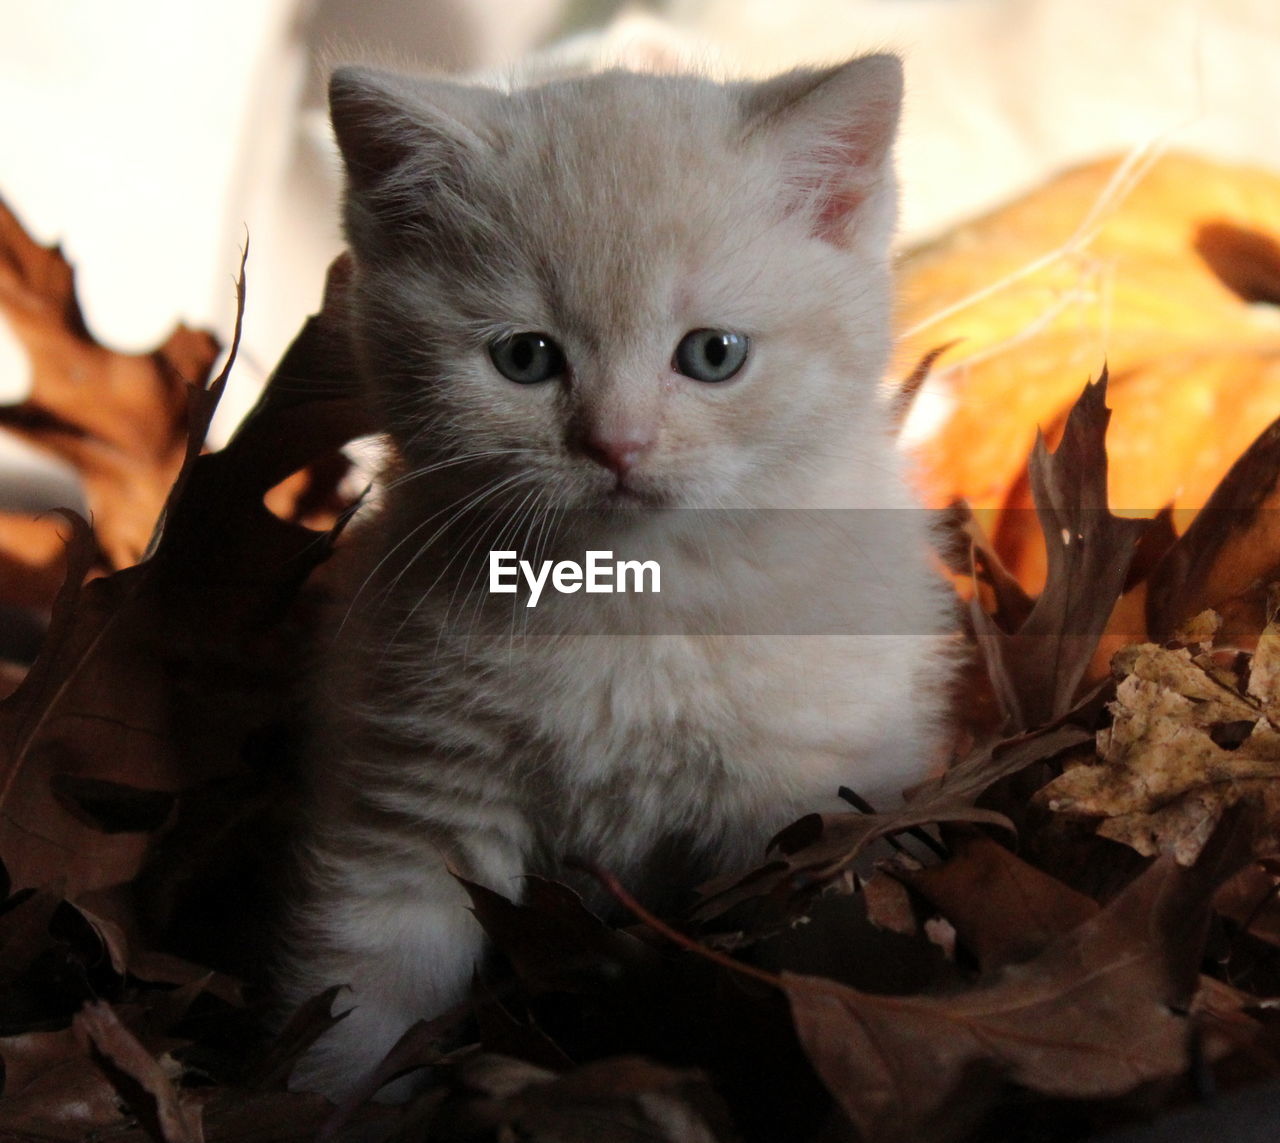 Portrait of white kitten amidst fallen leaves